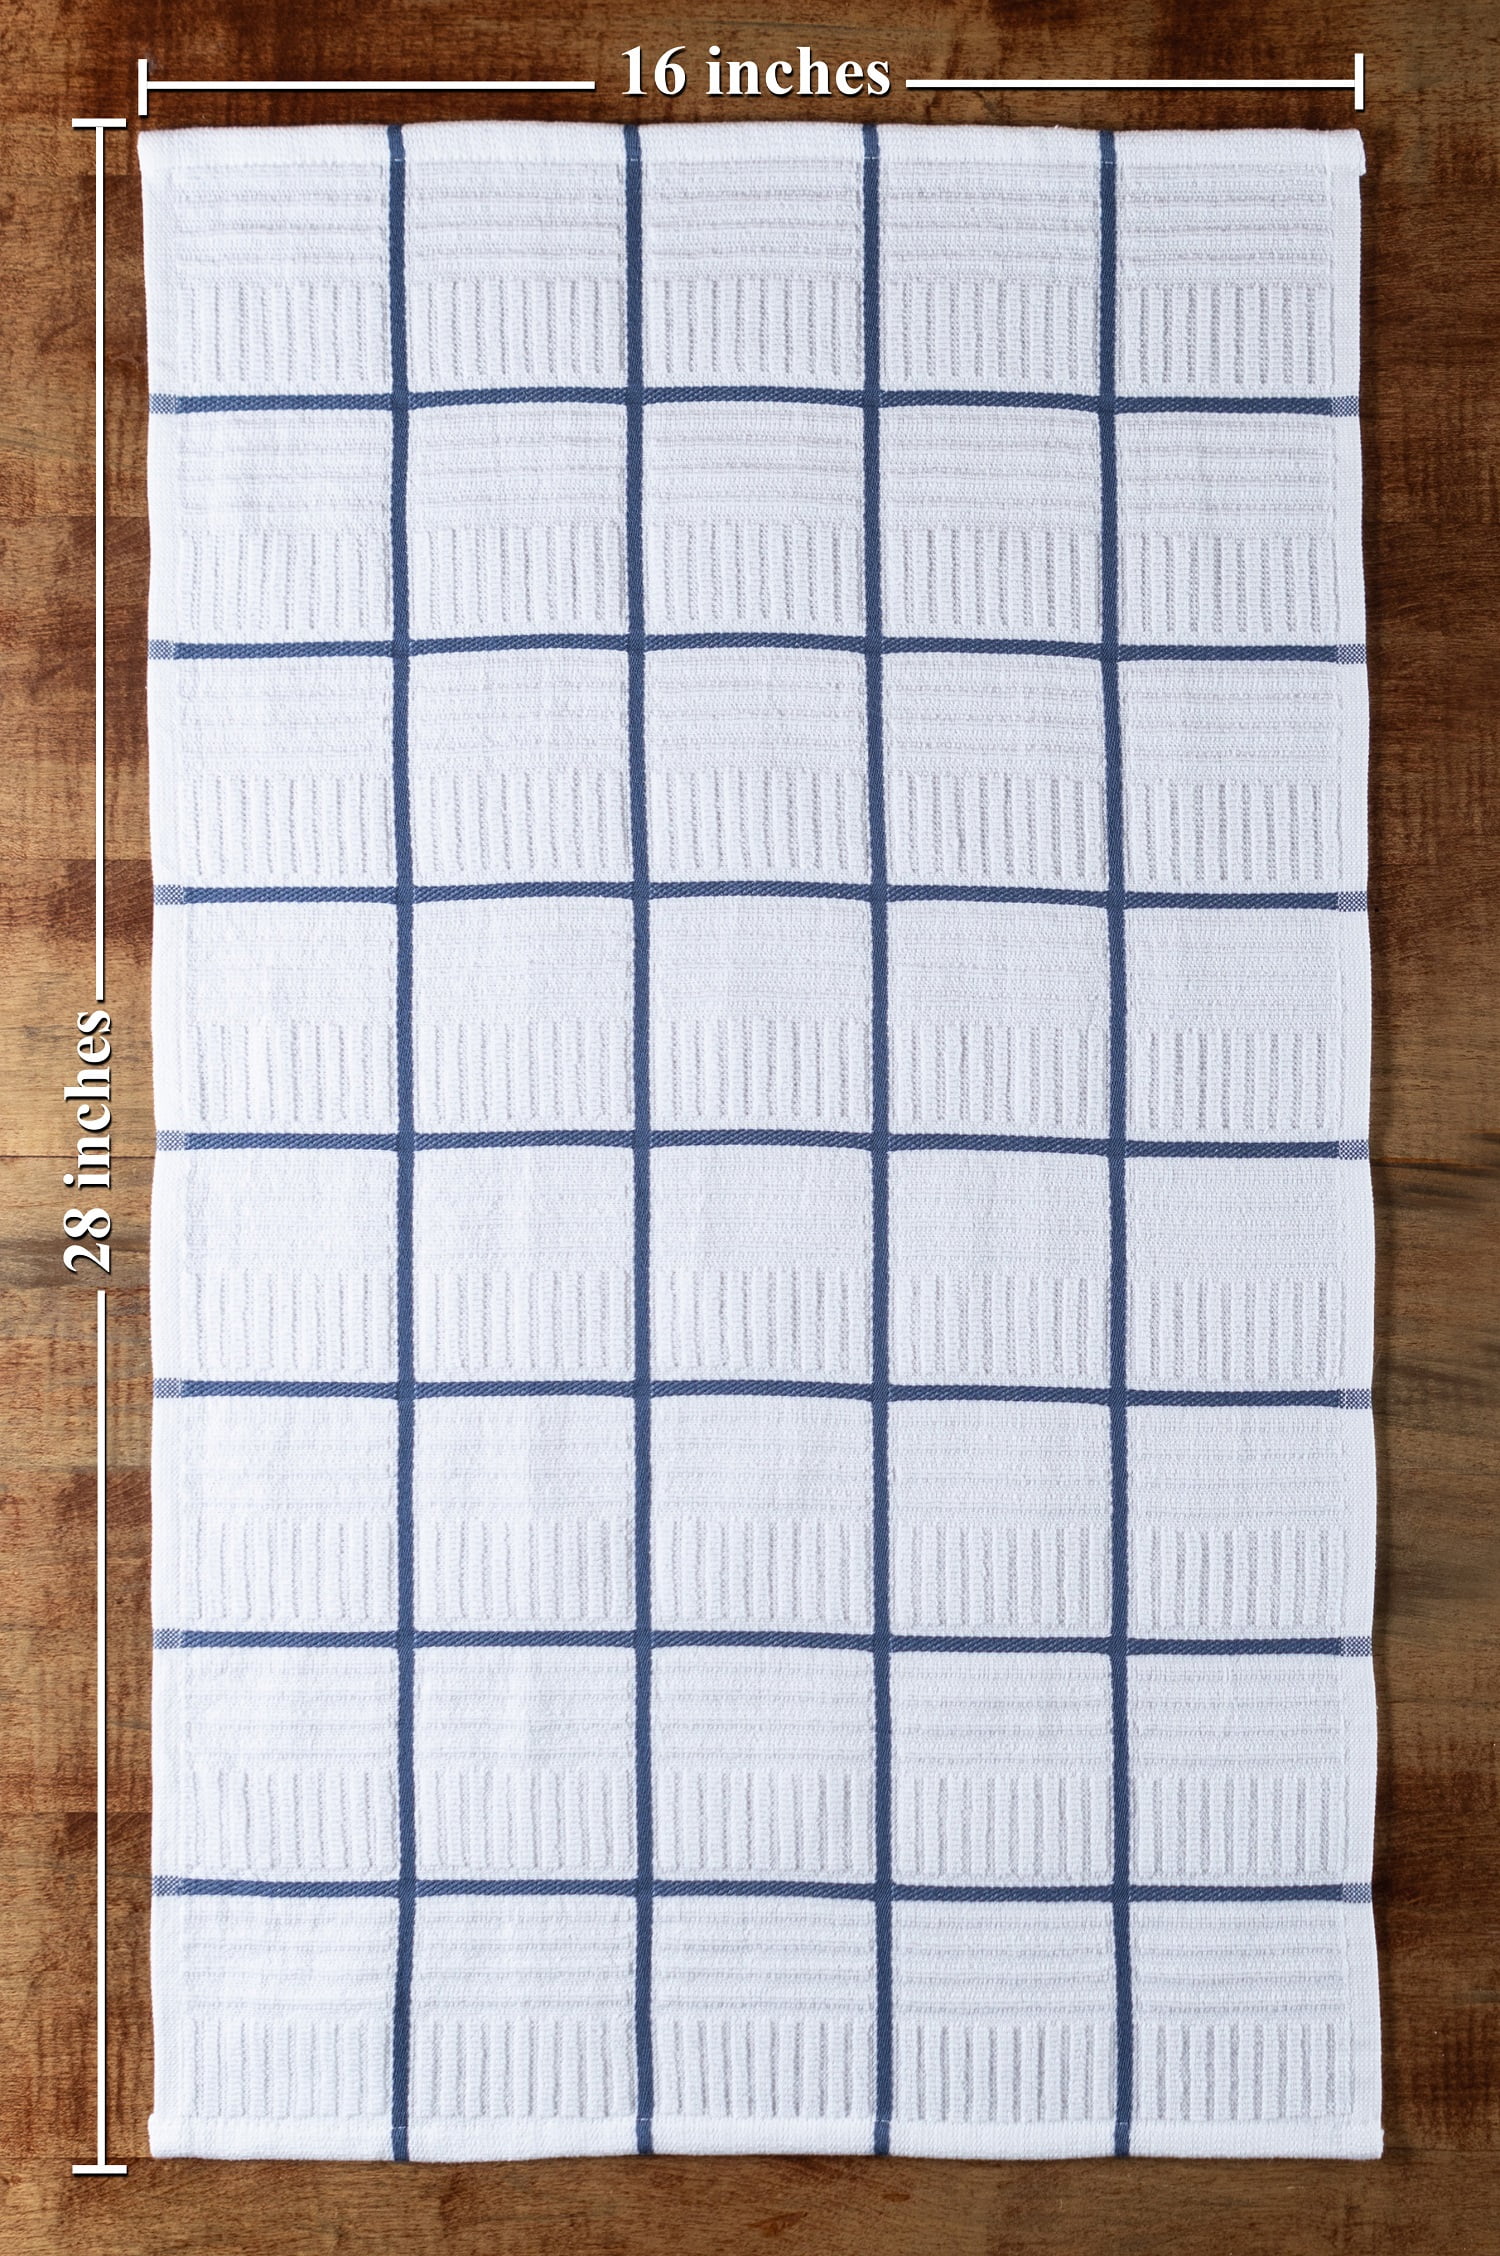 CUISINART KITCHEN TOWELS (2) BLUE WHITE STRIPES 16 X 28 100% COTTON NIP